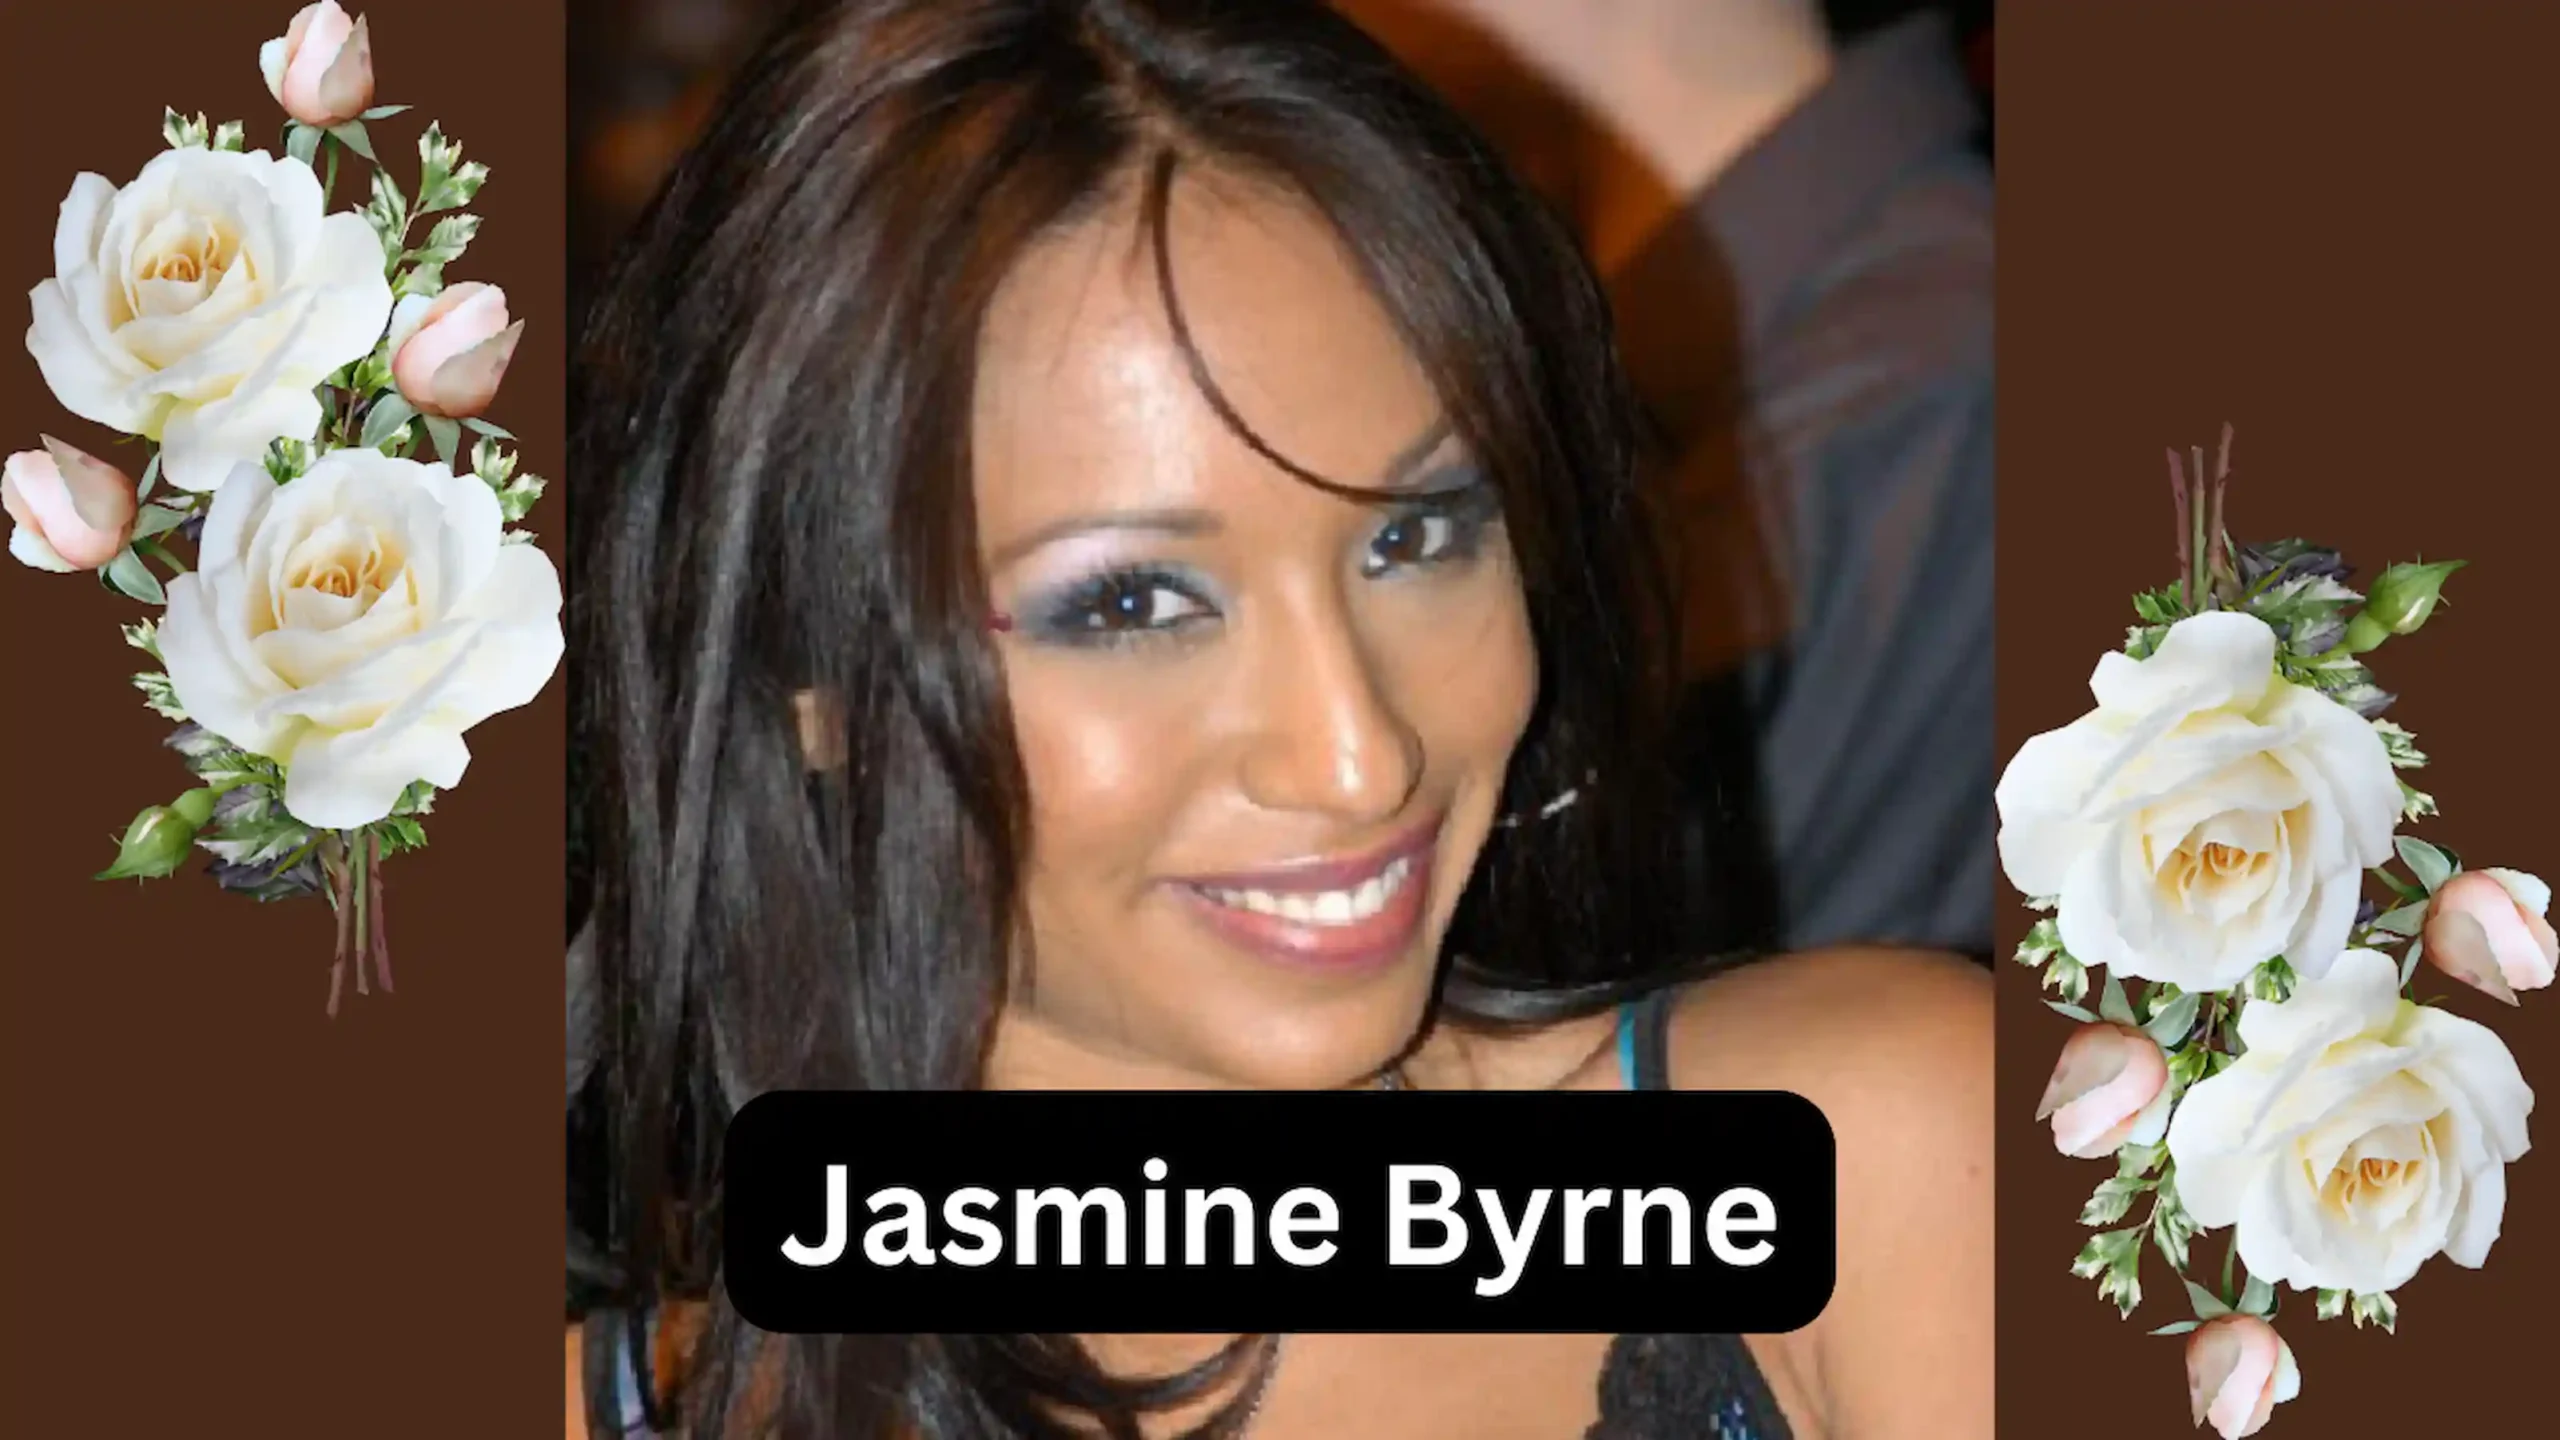 Jasmine Byrne Biography